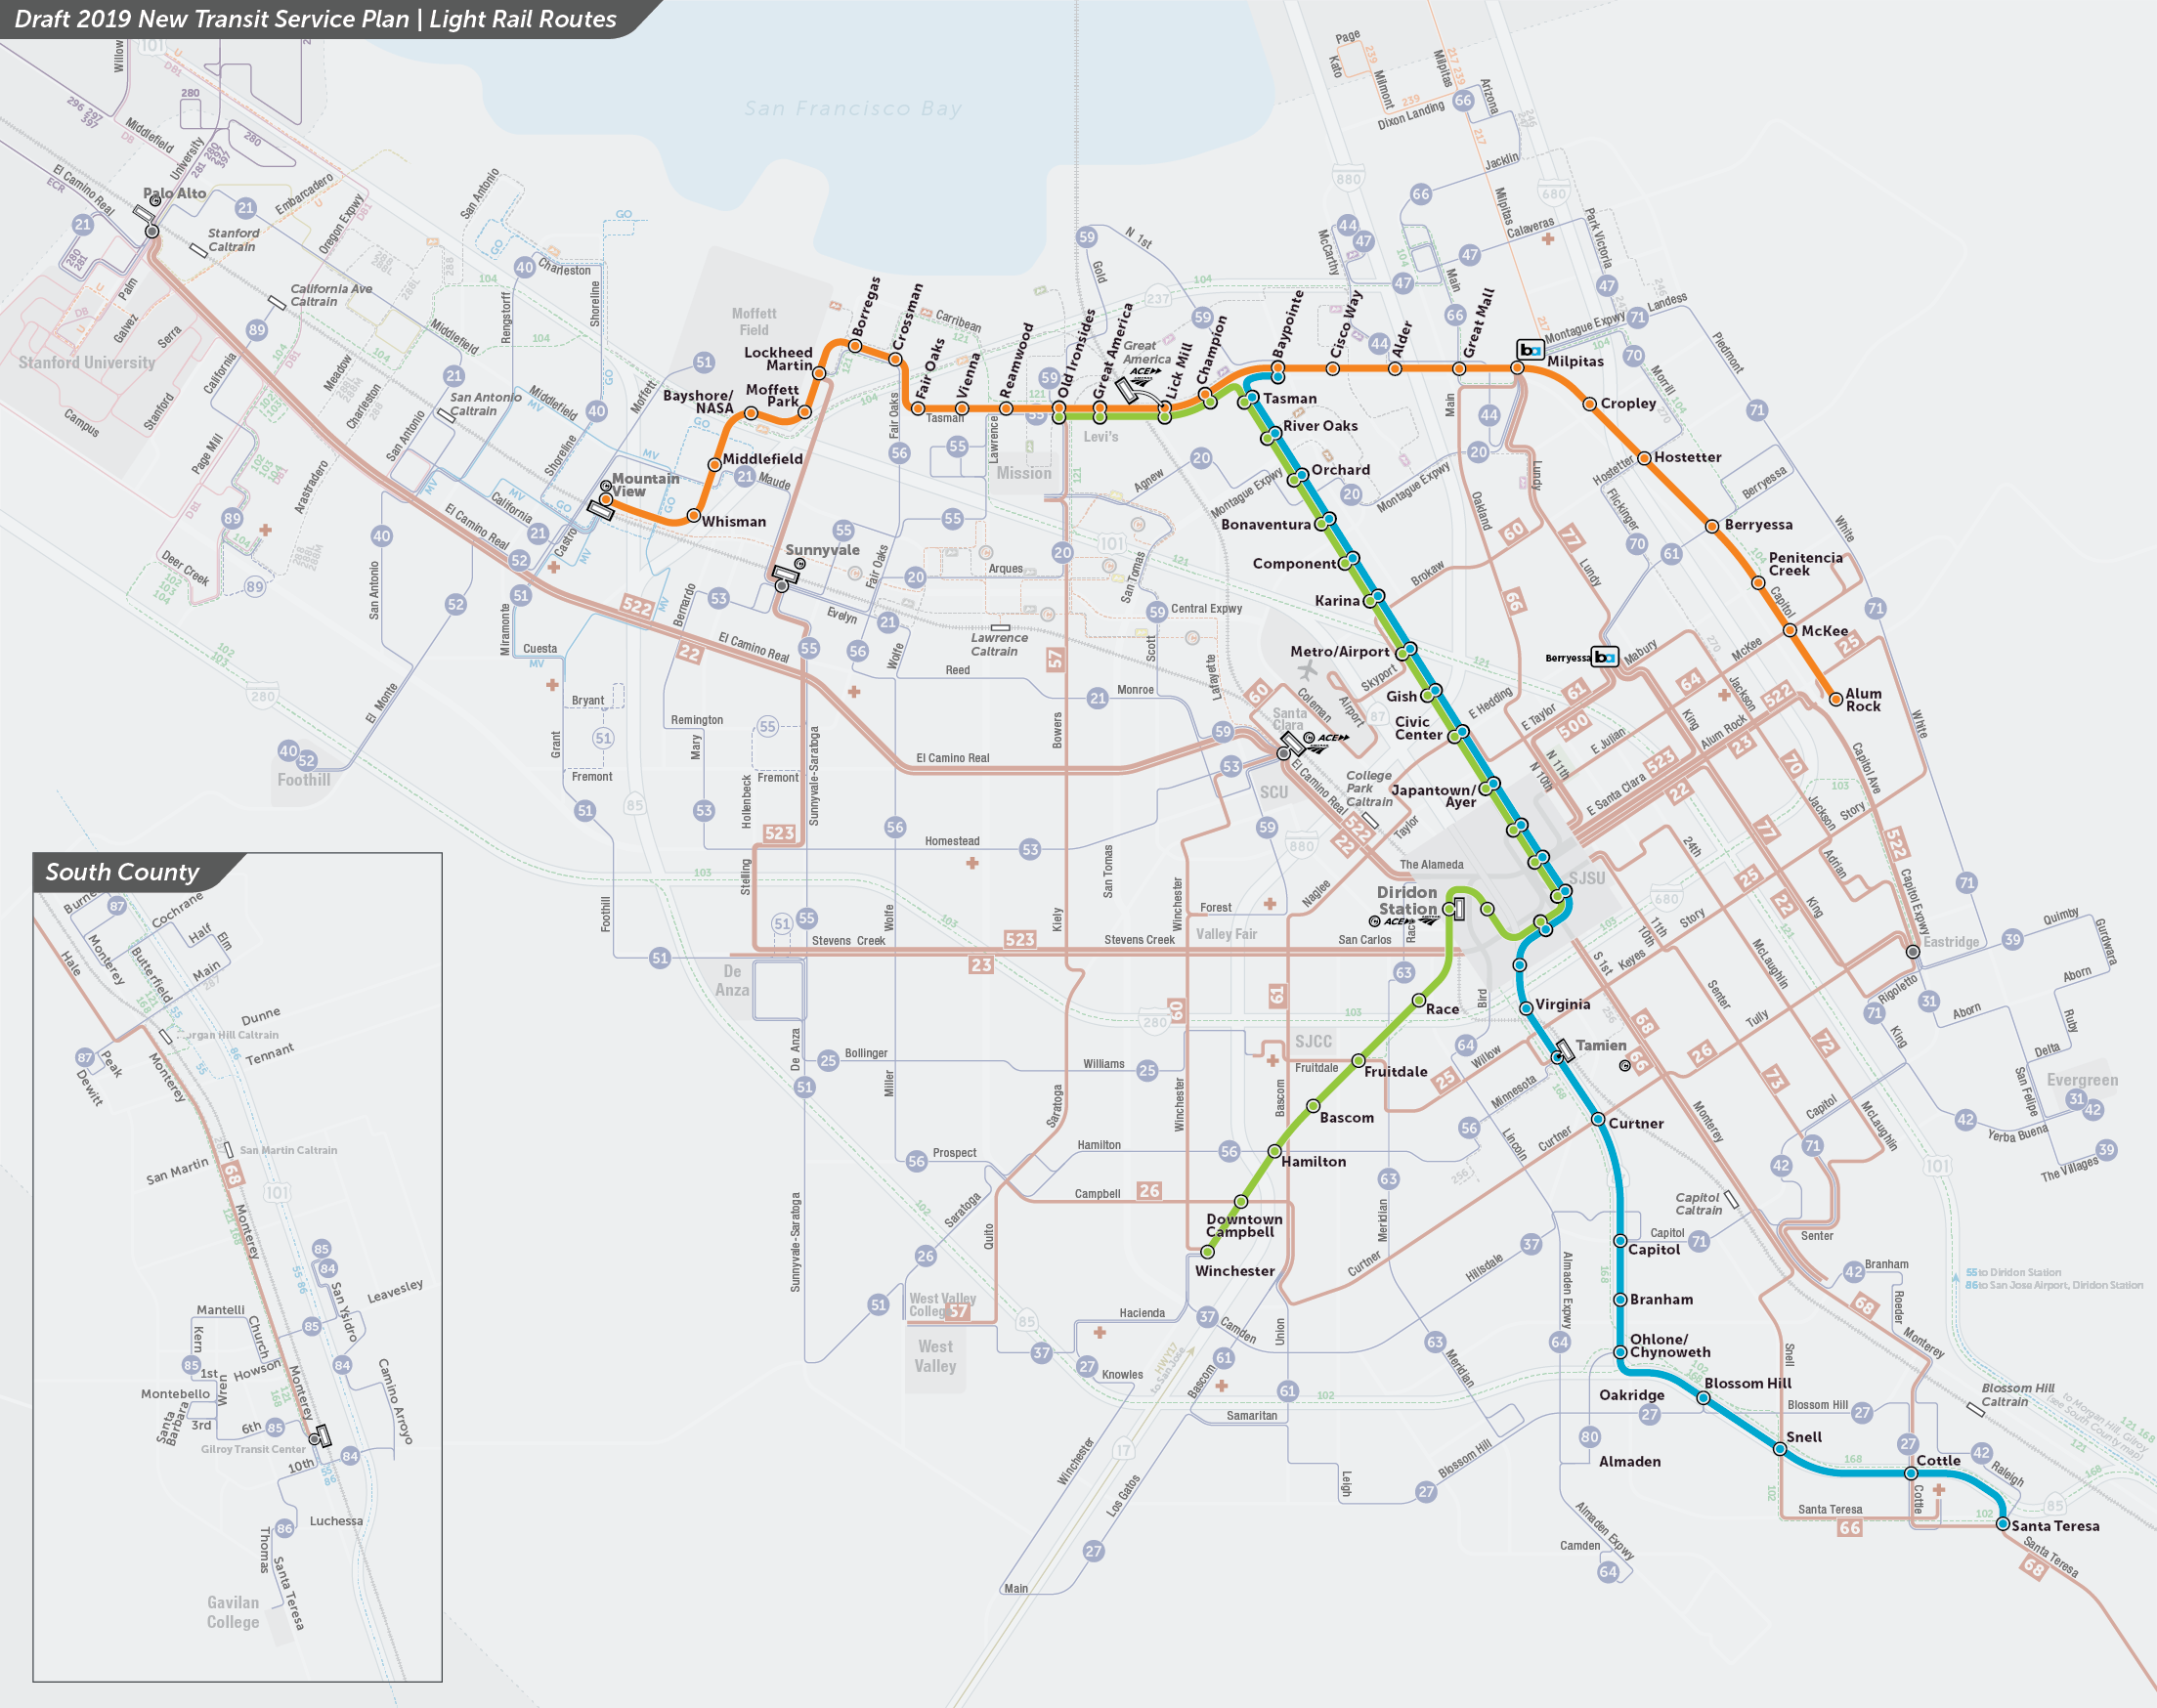 vta light rail map Proposed Light Rail Routes Draft 2019 New Transit Service Plan